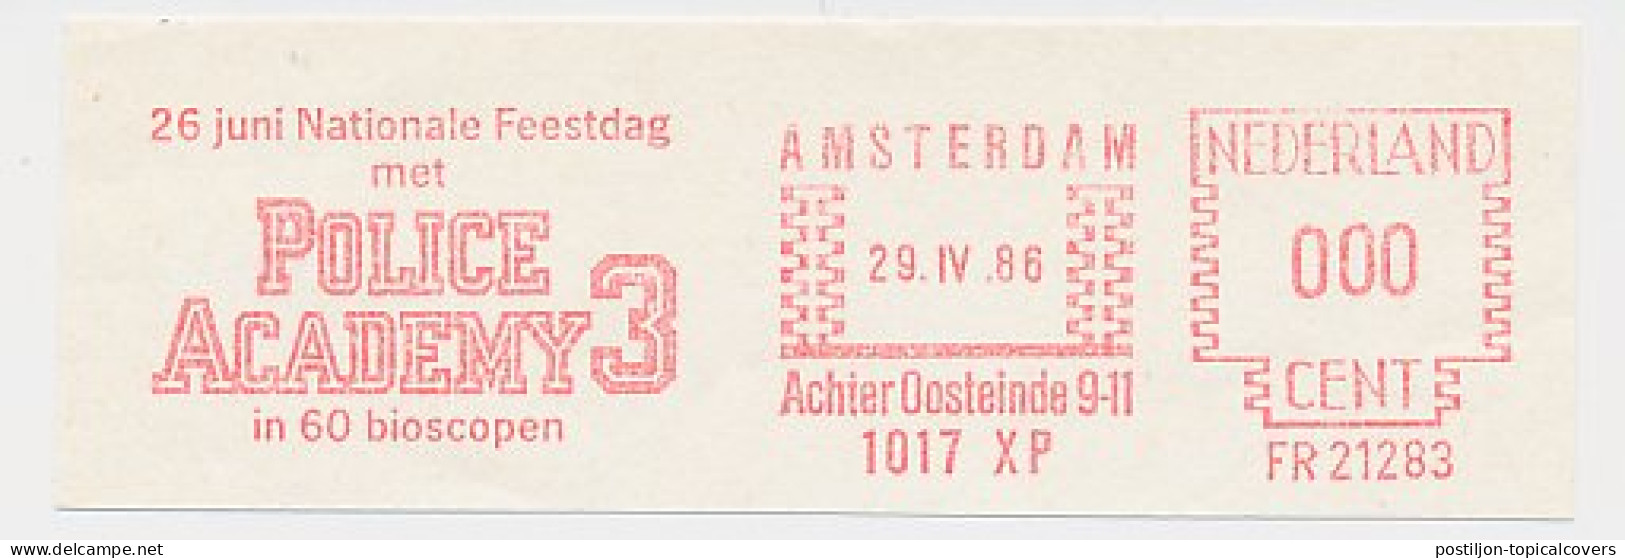 Meter Proof / Test Strip Netherlands 1986- Frama 21283 Police Academy 3 - Movie - Film